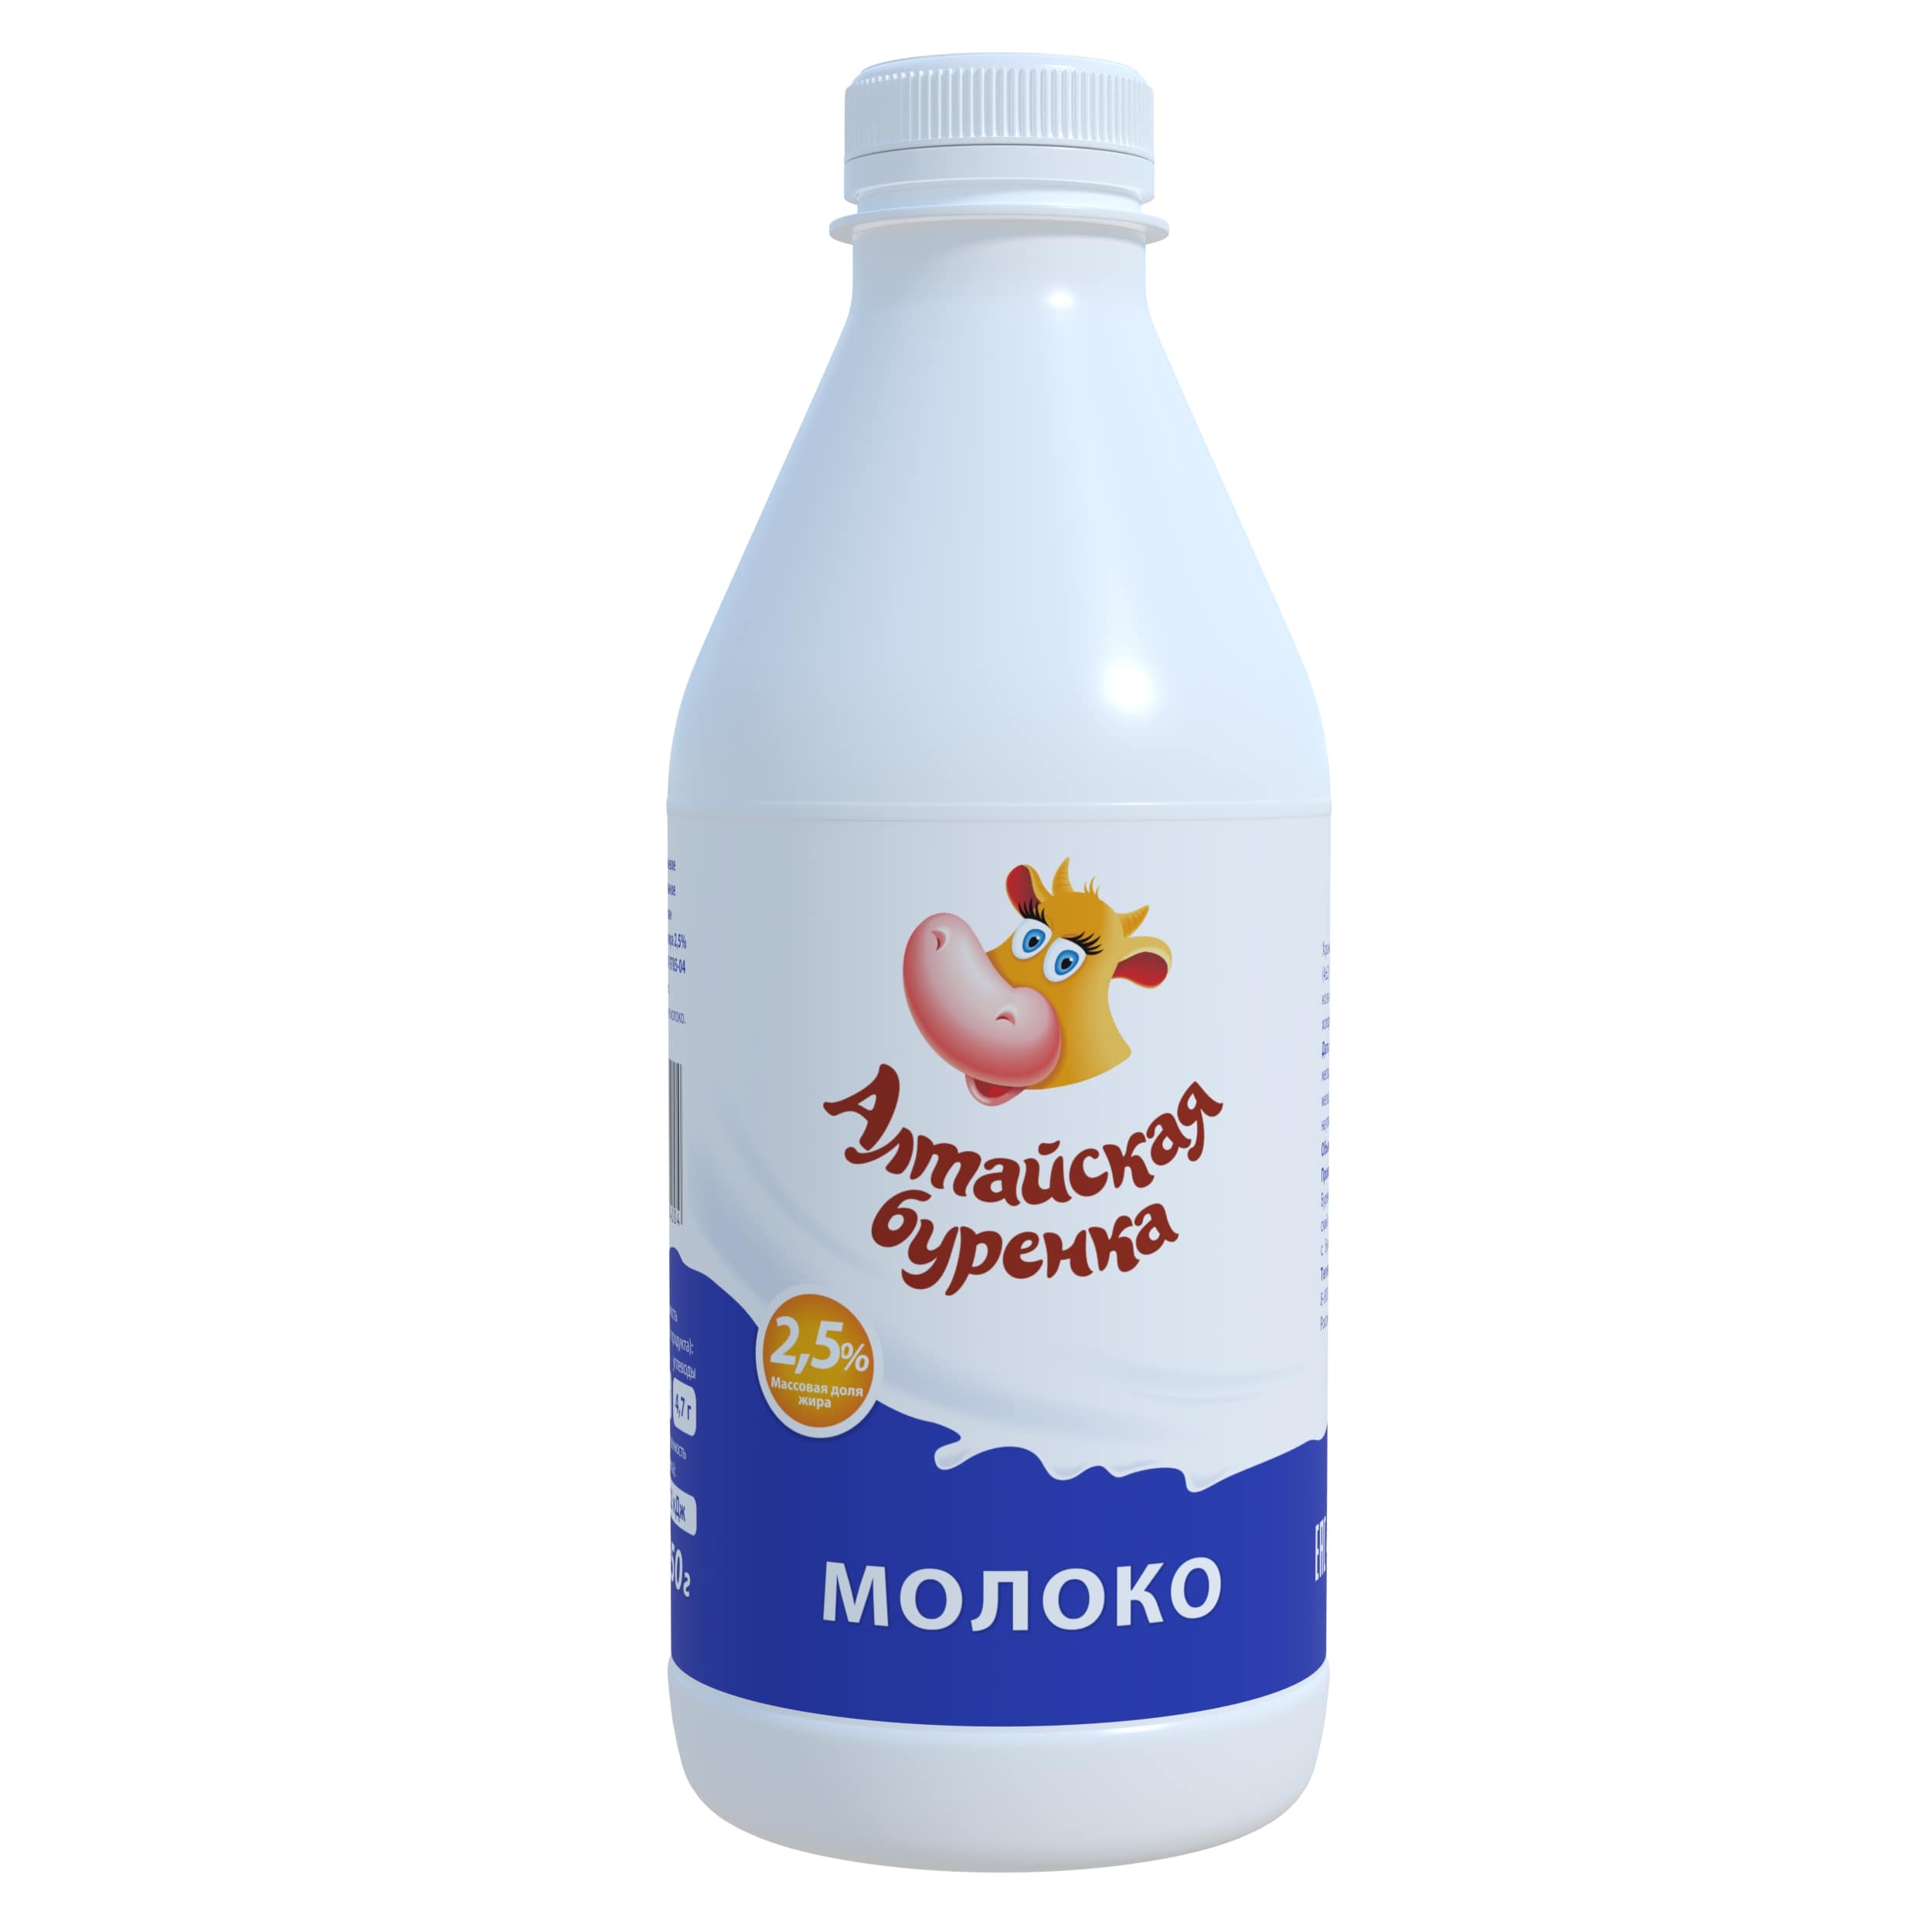 Молоко 2,5% Алтайская Буренка пэт-бутылка 850 г